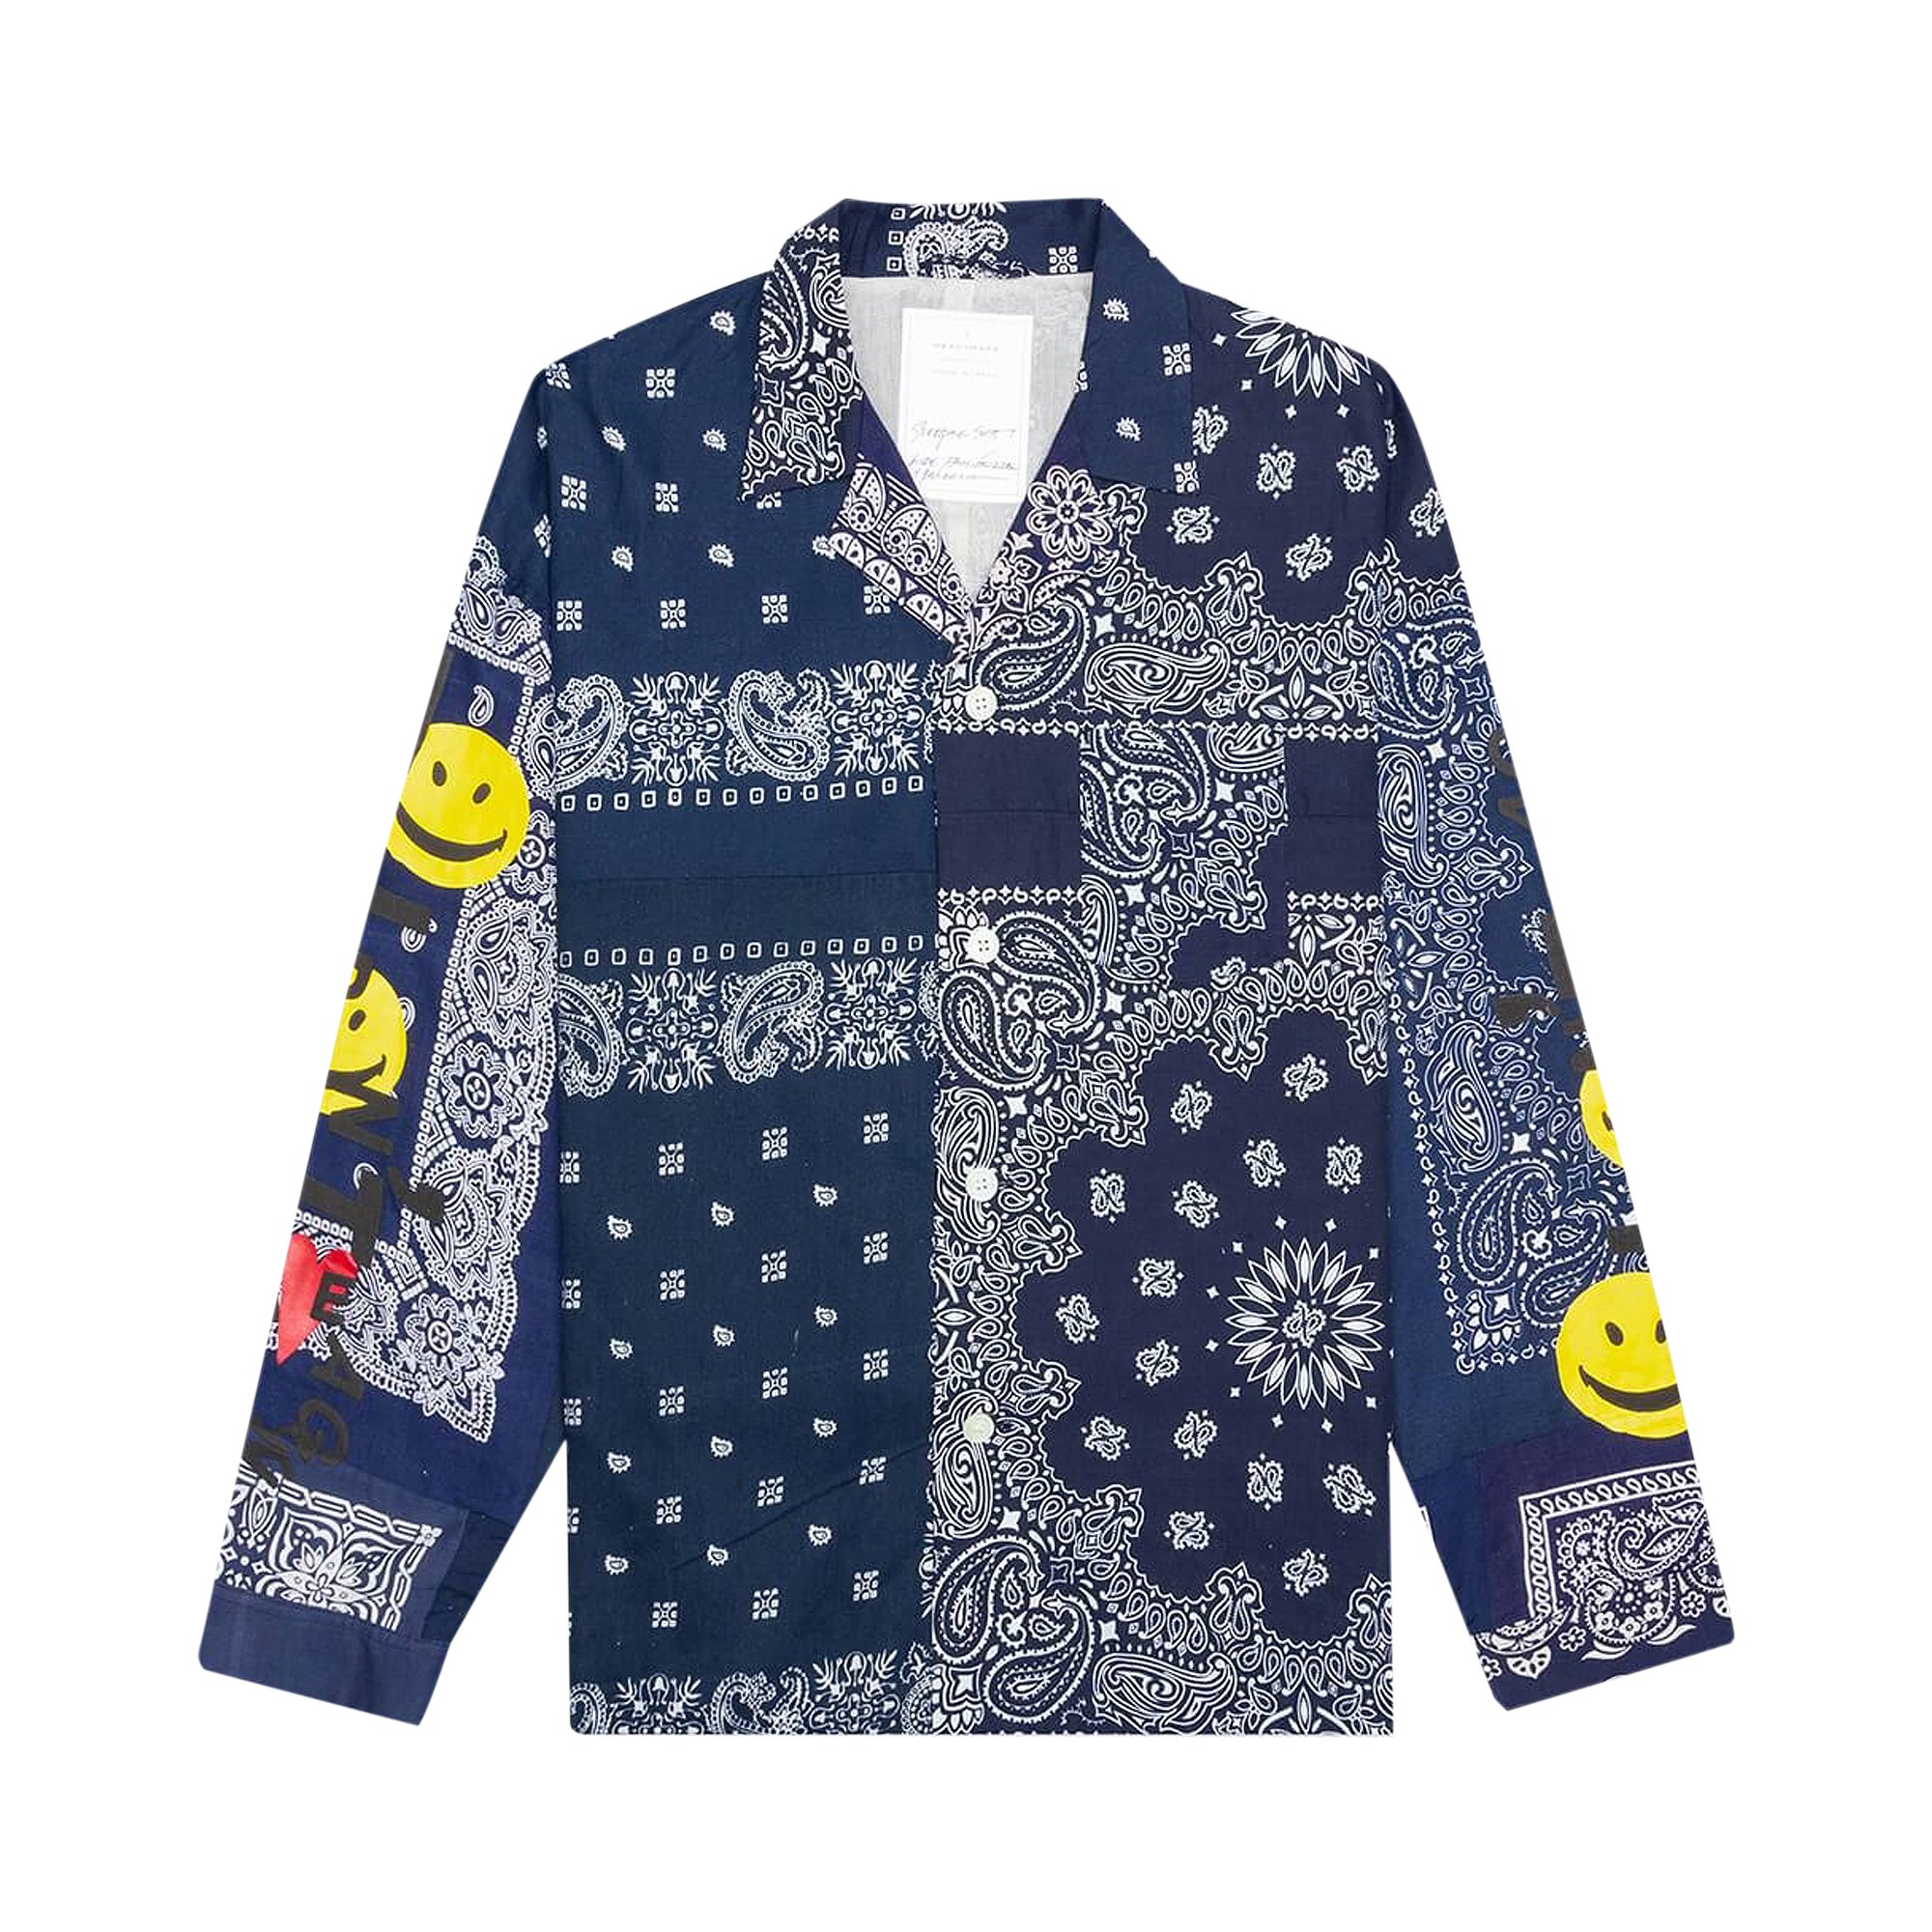 Buy READYMADE Bandana Sleeping Shirt 'Blue' - RE CO NV 00 00 93 | GOAT